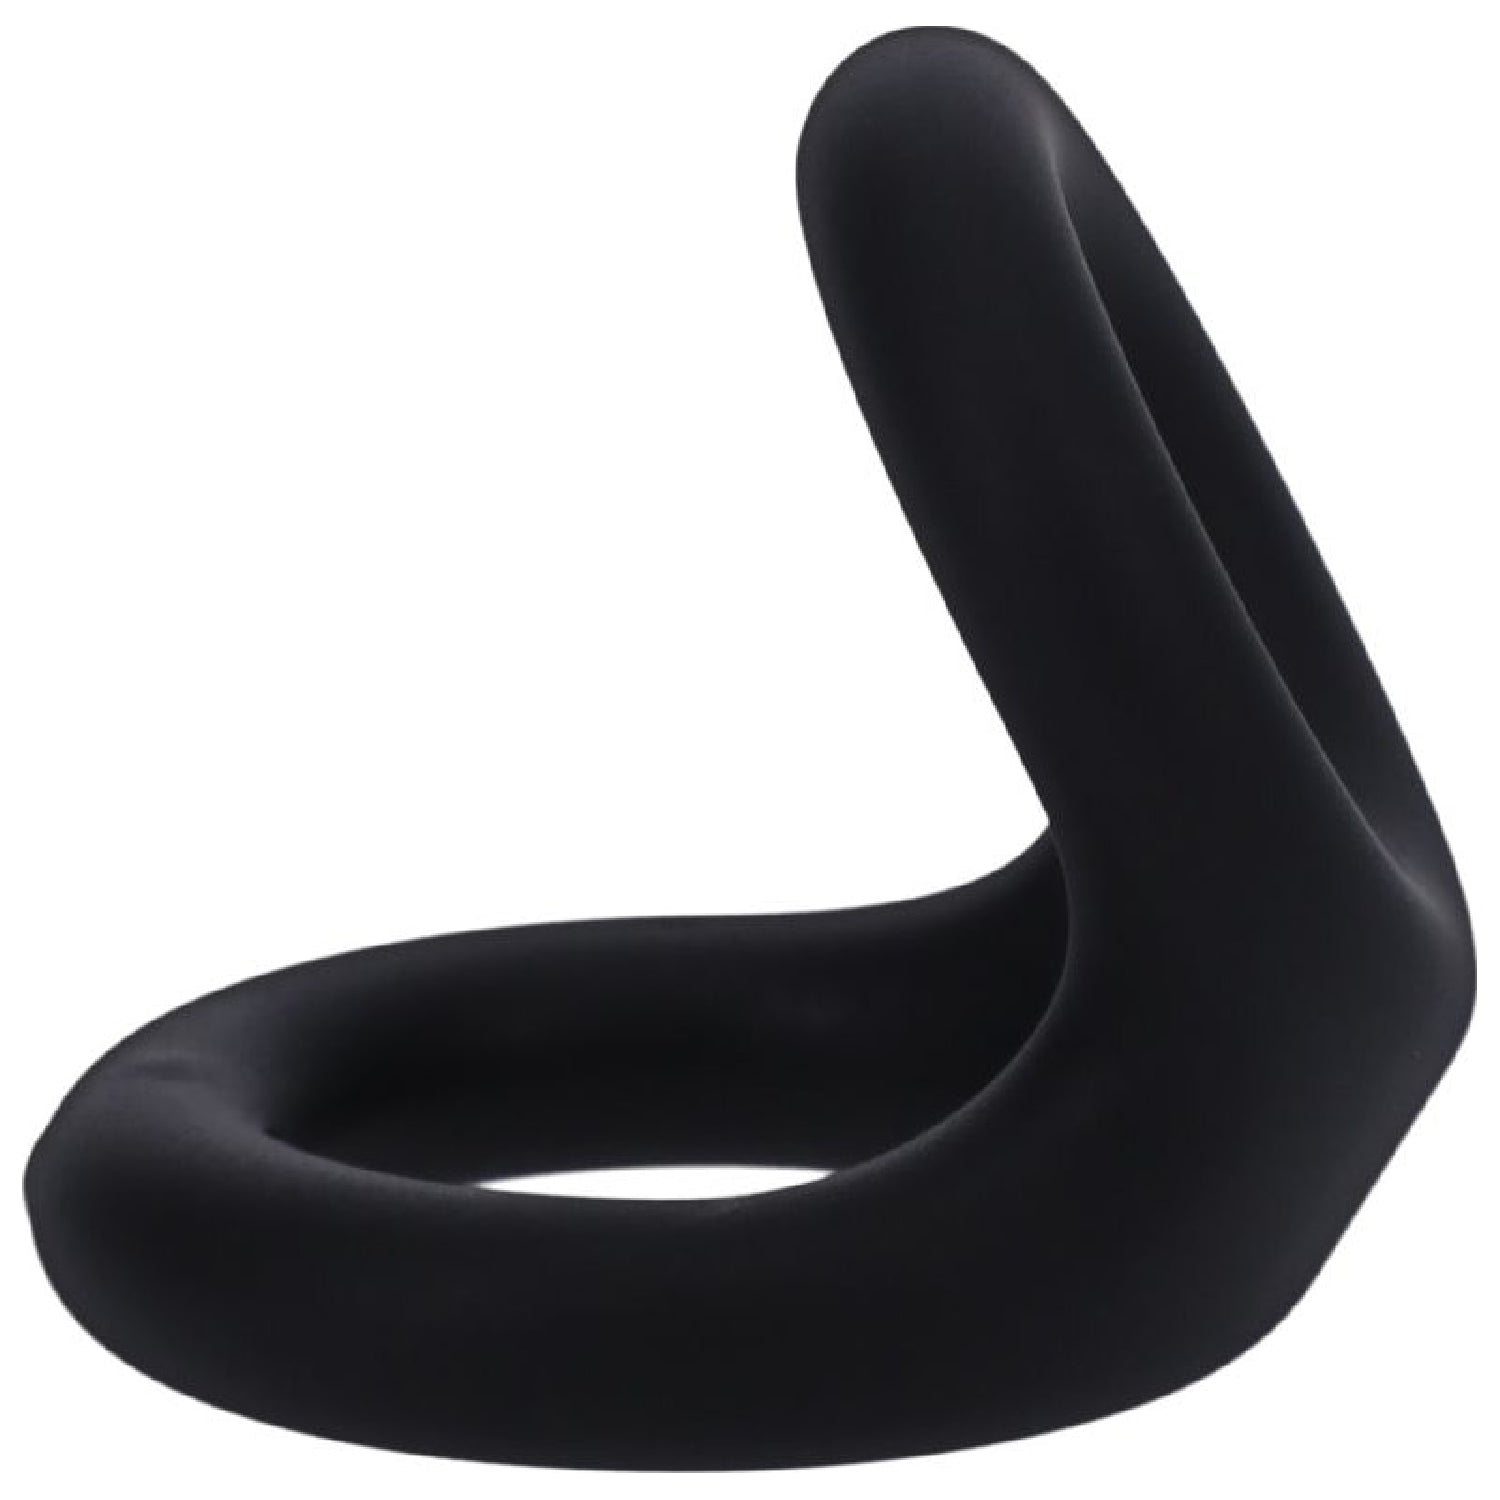 Uplift Silicone Cock Ring - Onyx Black